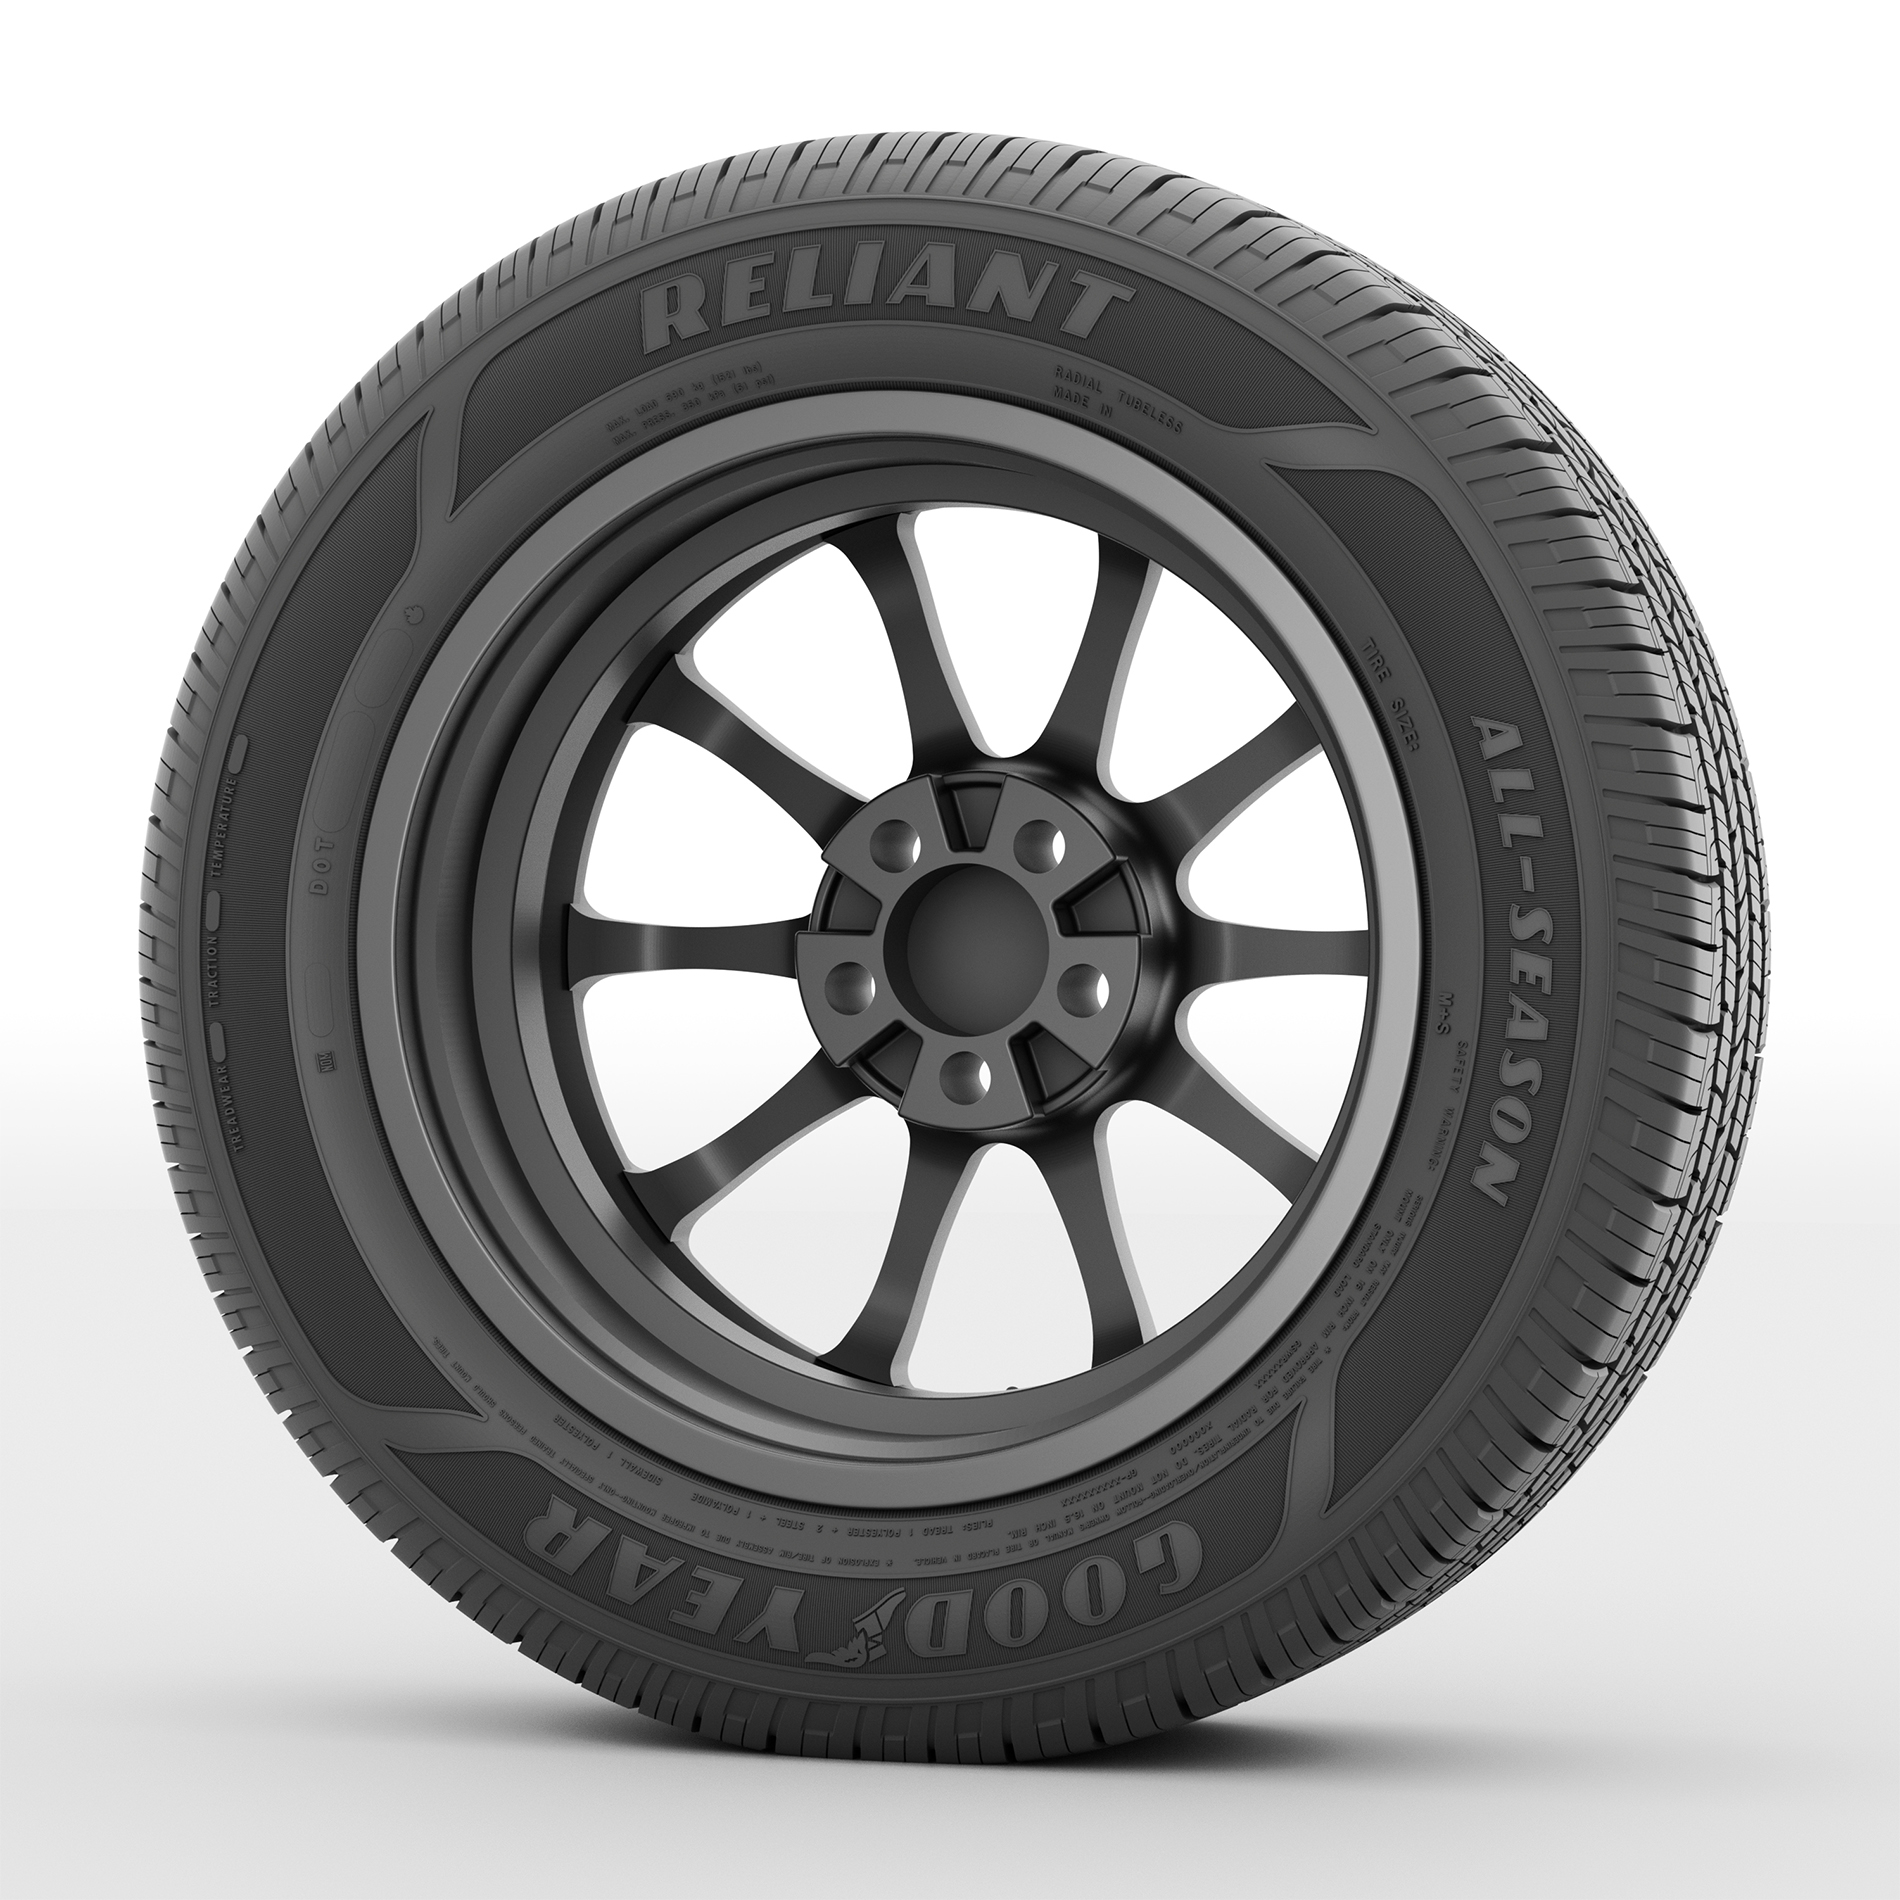 235/55R17 All-Season 99H All-Season Reliant Goodyear Tire